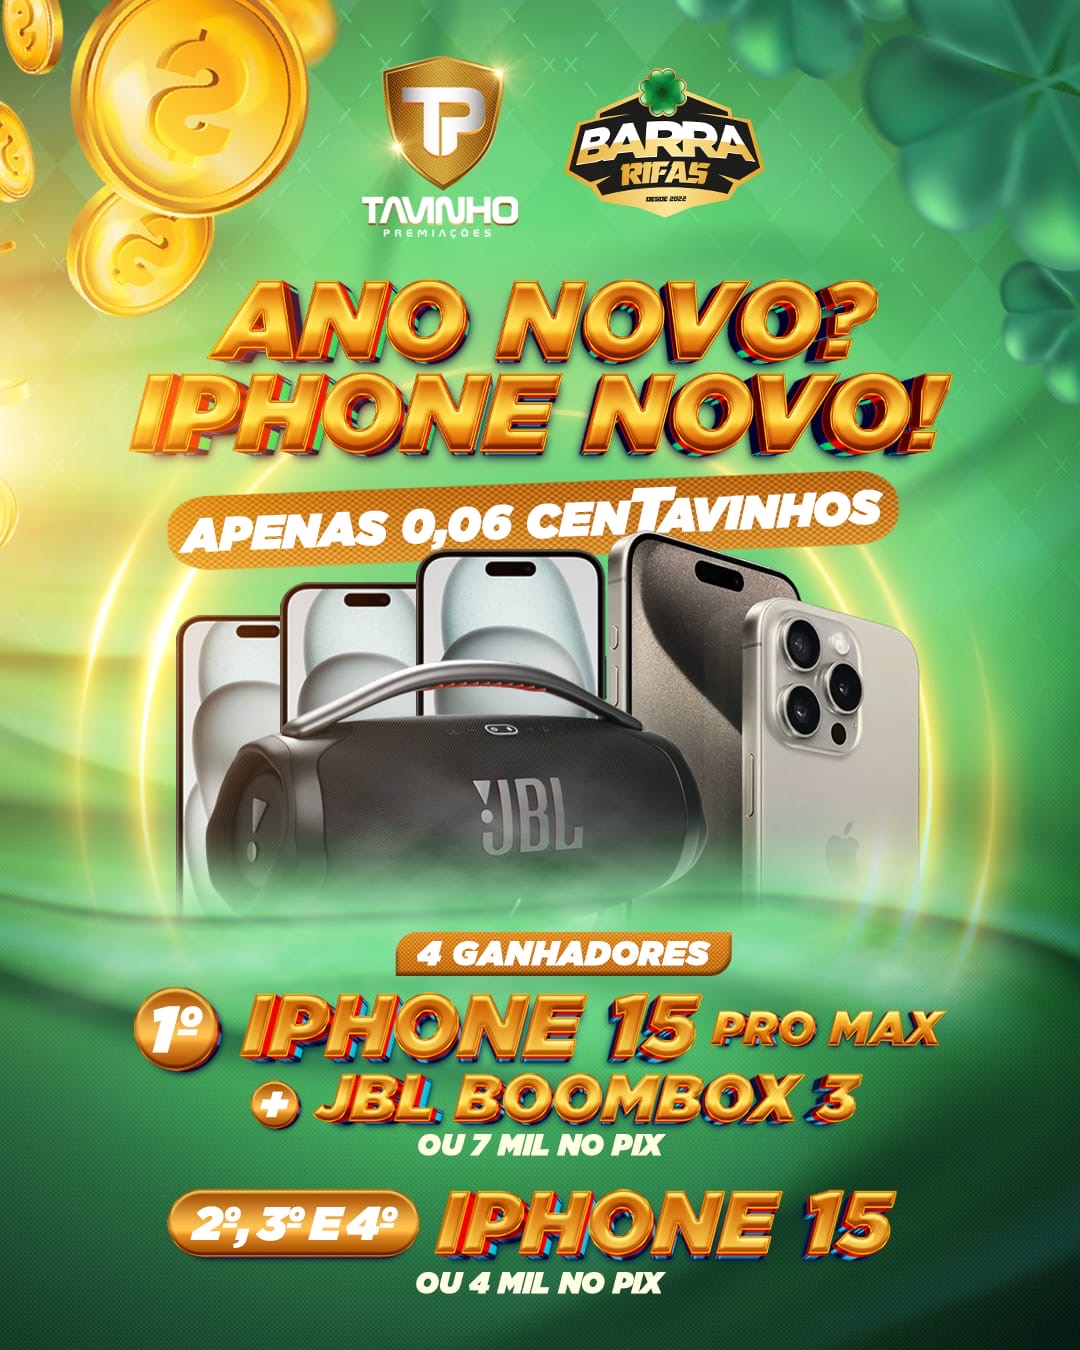 Iphone 15 pro Max + JBL 3 + 3 iPhones 15 (4 ganhadores)